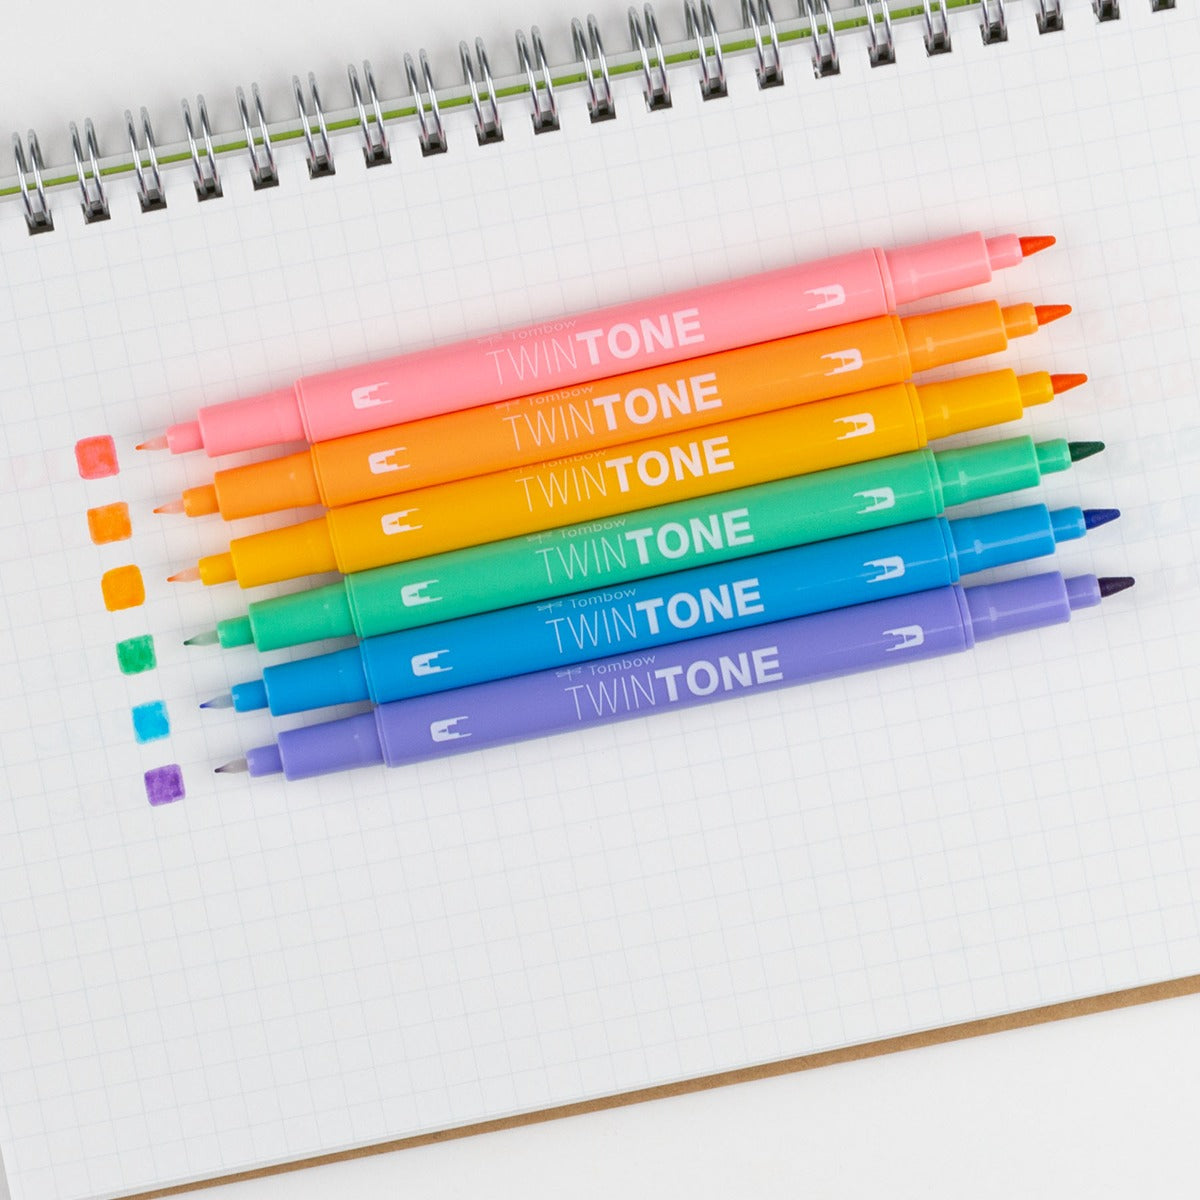 TwinTone Dual Tip Art Marker Rainbow Set, 12-Pack